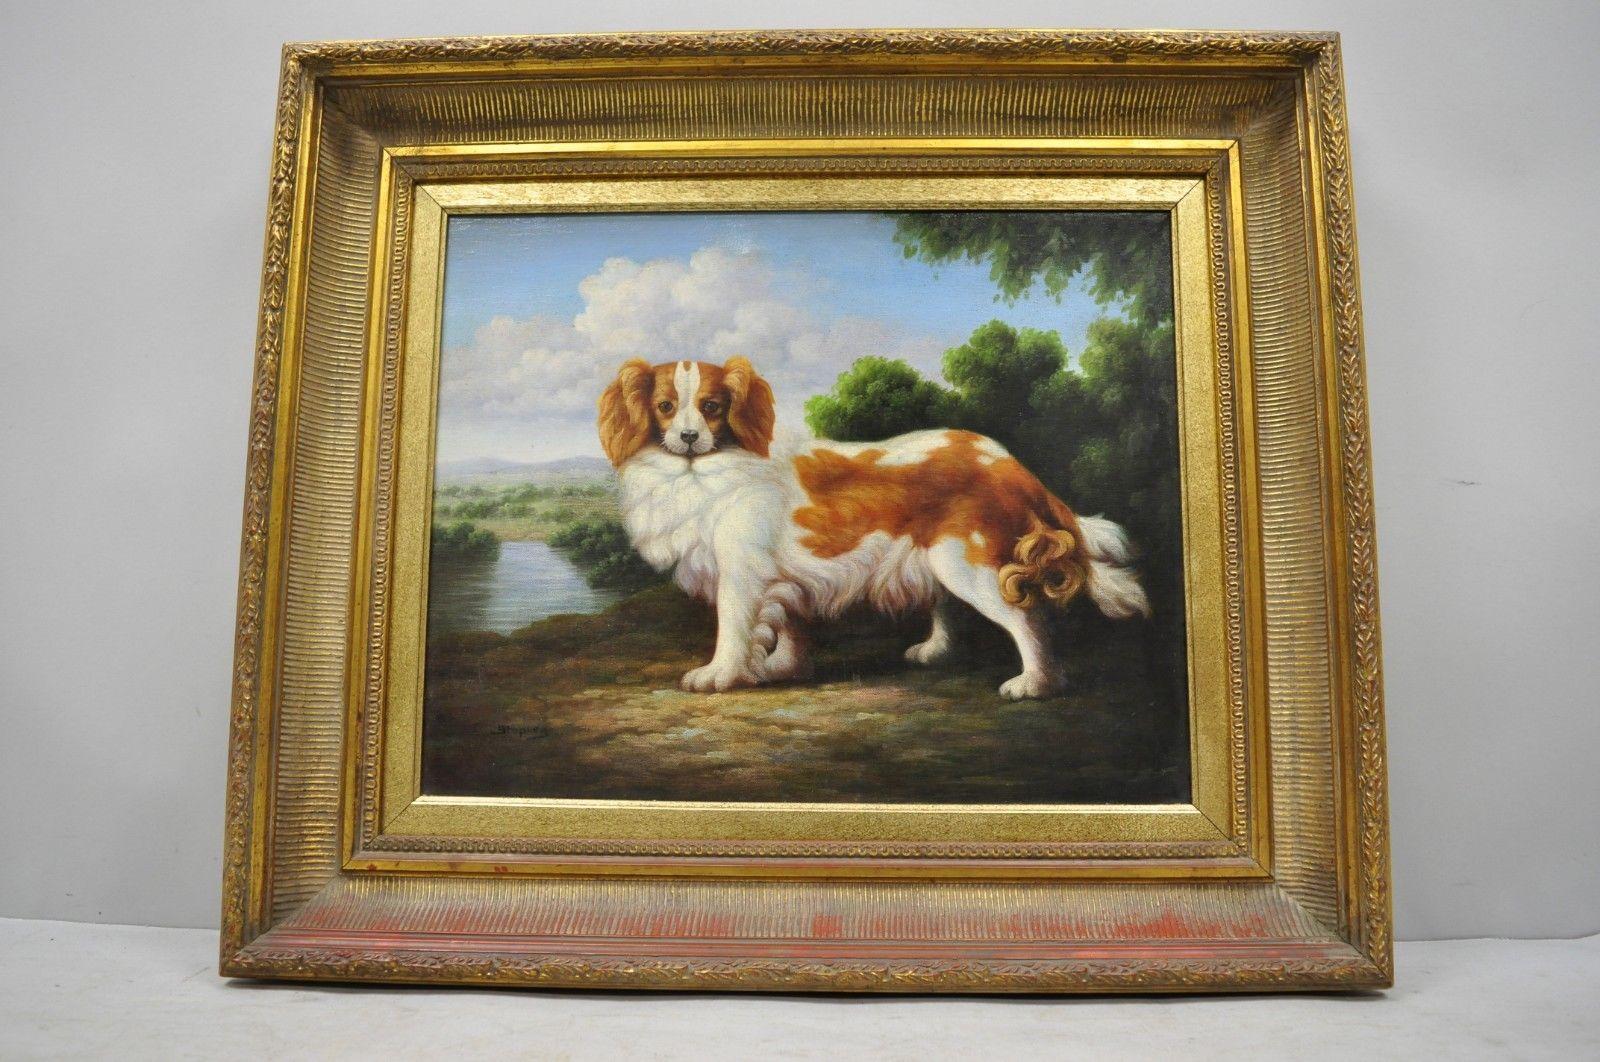 Wood Shipley Signed Oil Painting Spaniel Dog in Landscape Gold Frame